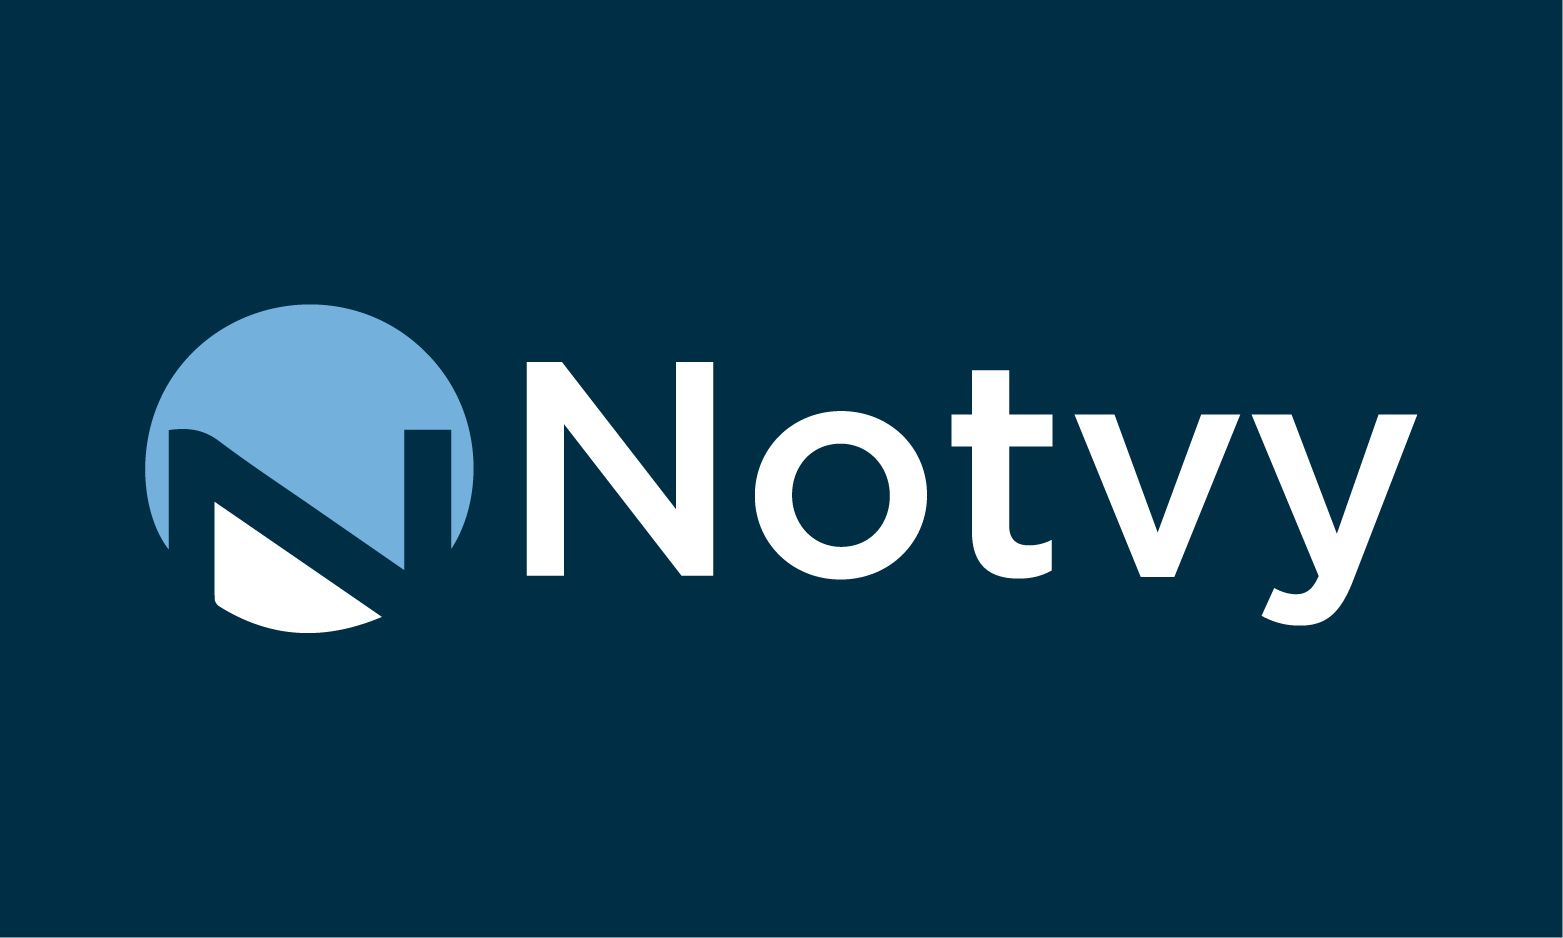 Notvy.com - Creative brandable domain for sale